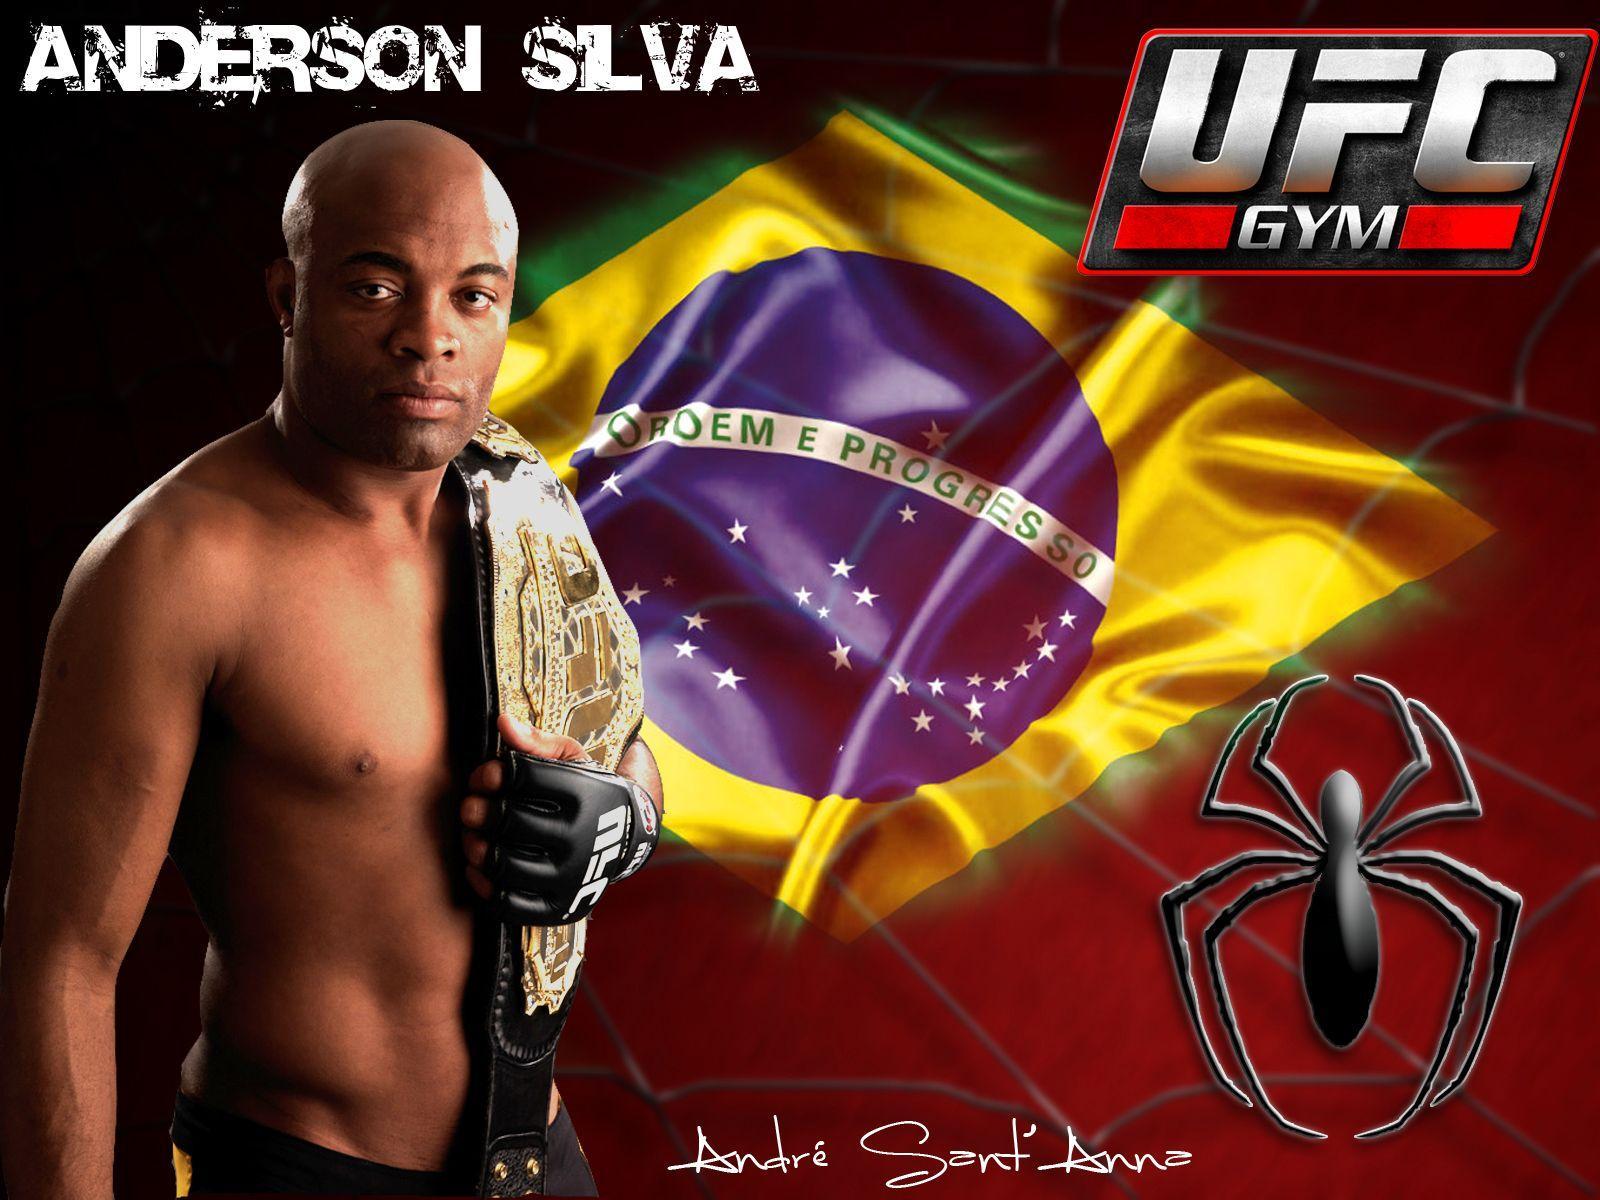 All Sports Superstars: Anderson Silva HD Wallpaper 2012